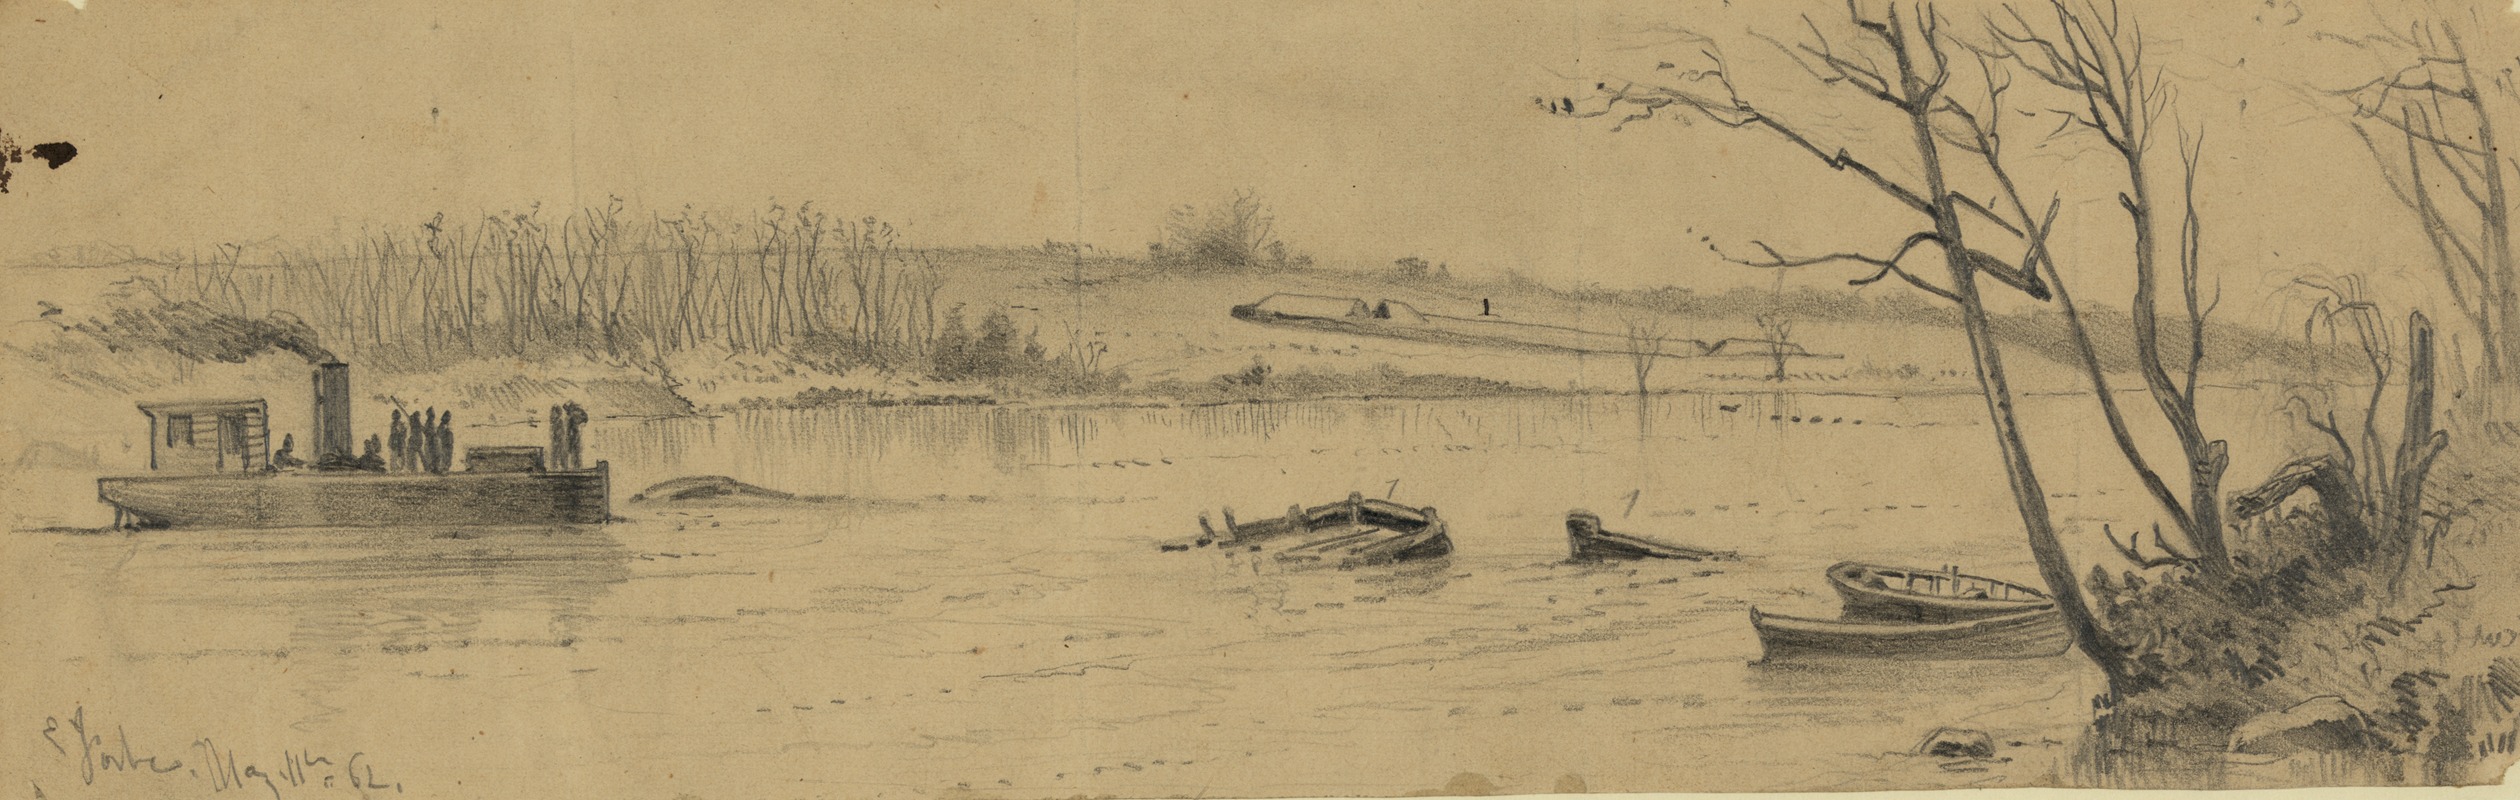 Edwin Forbes - Sunken vessels, in the Rappahannock River, below Fredericksburg, with earthwork commanding the channel